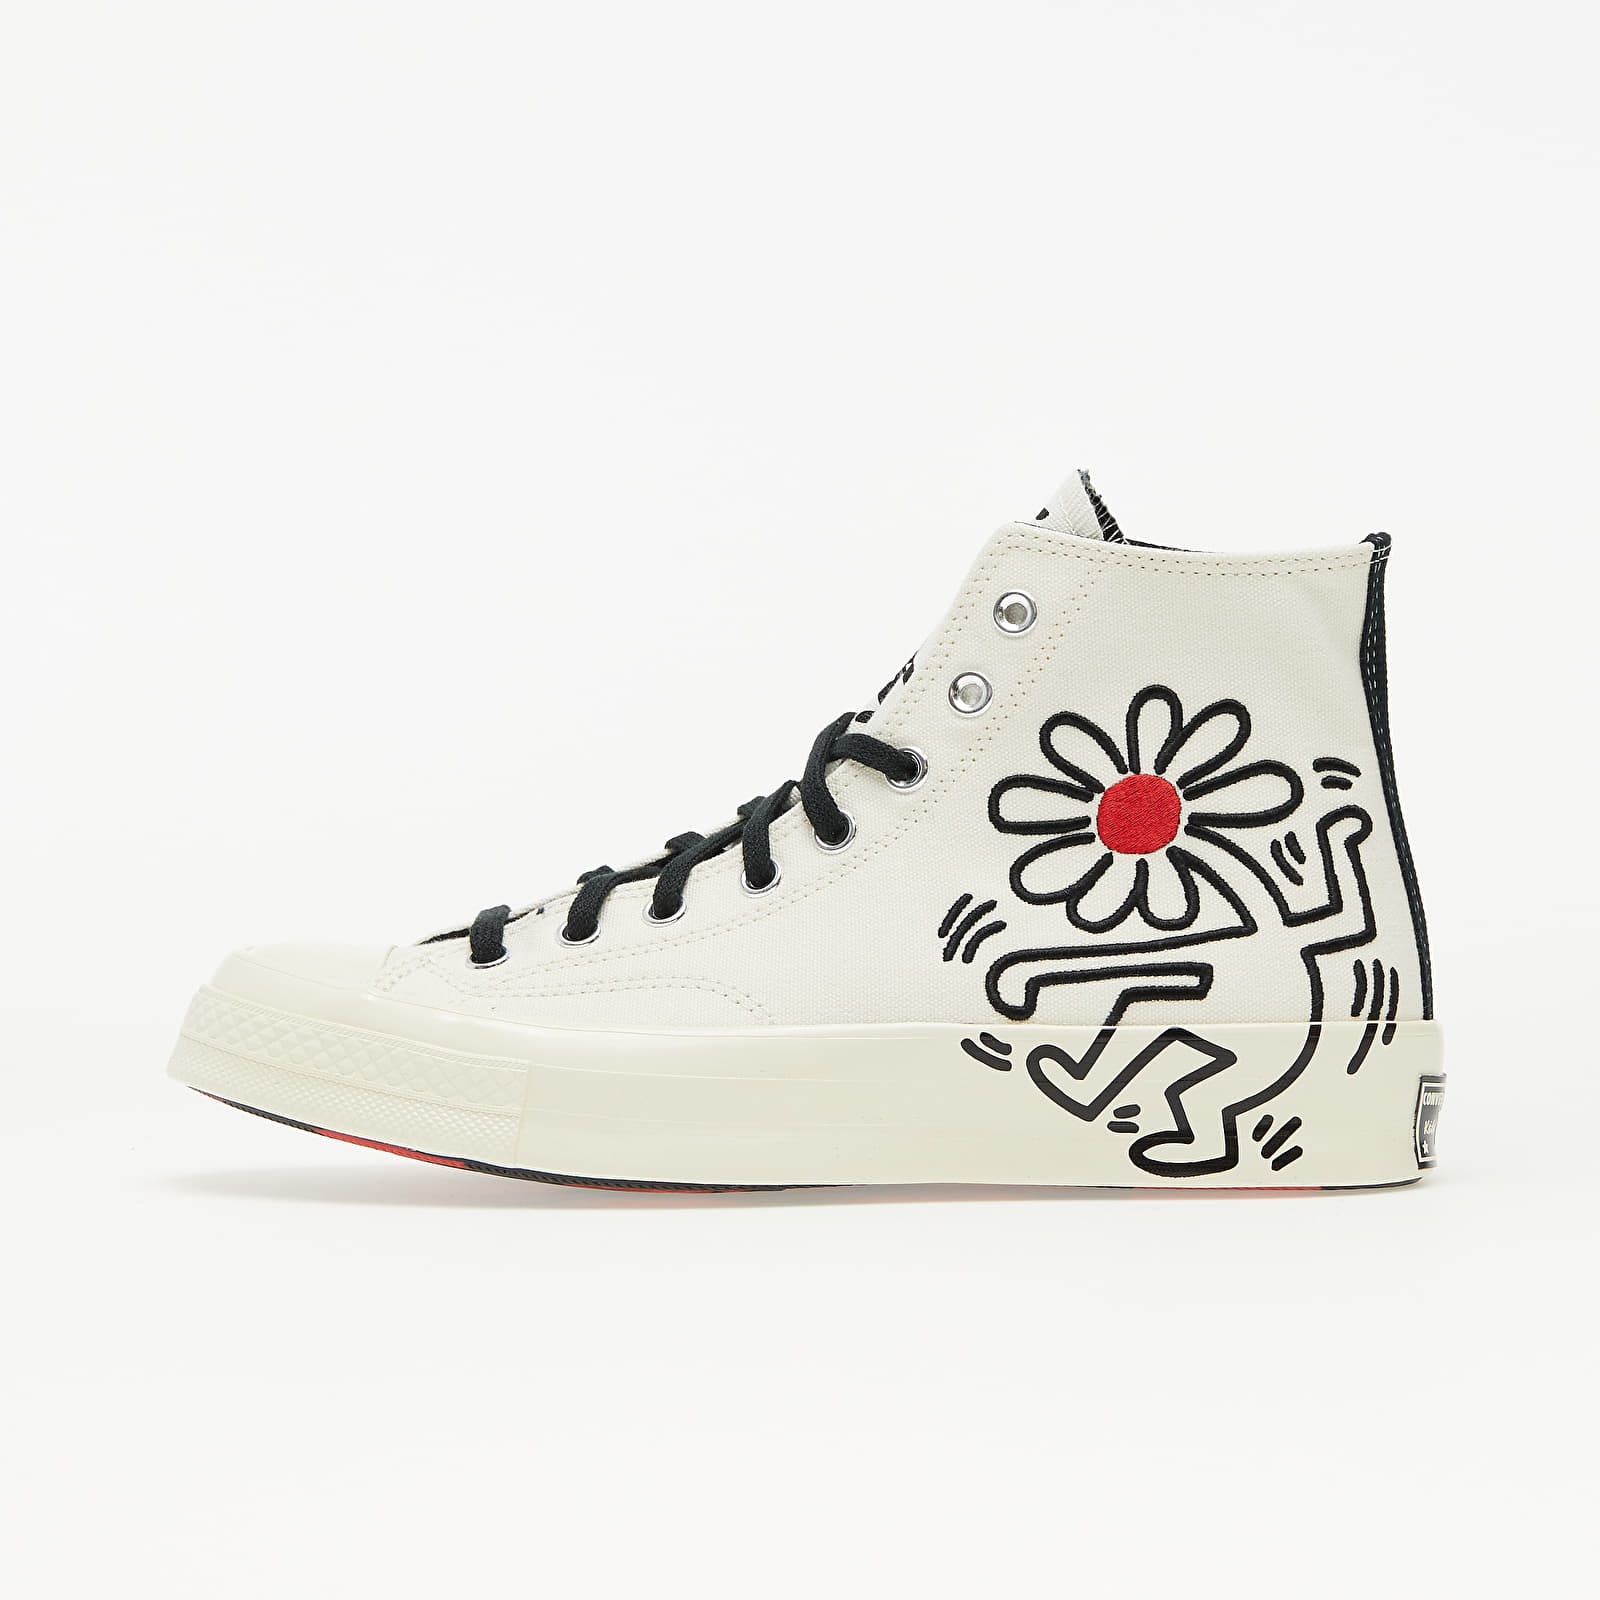 Keith Haring x Converse Chuck Taylor 'White' | 171858C